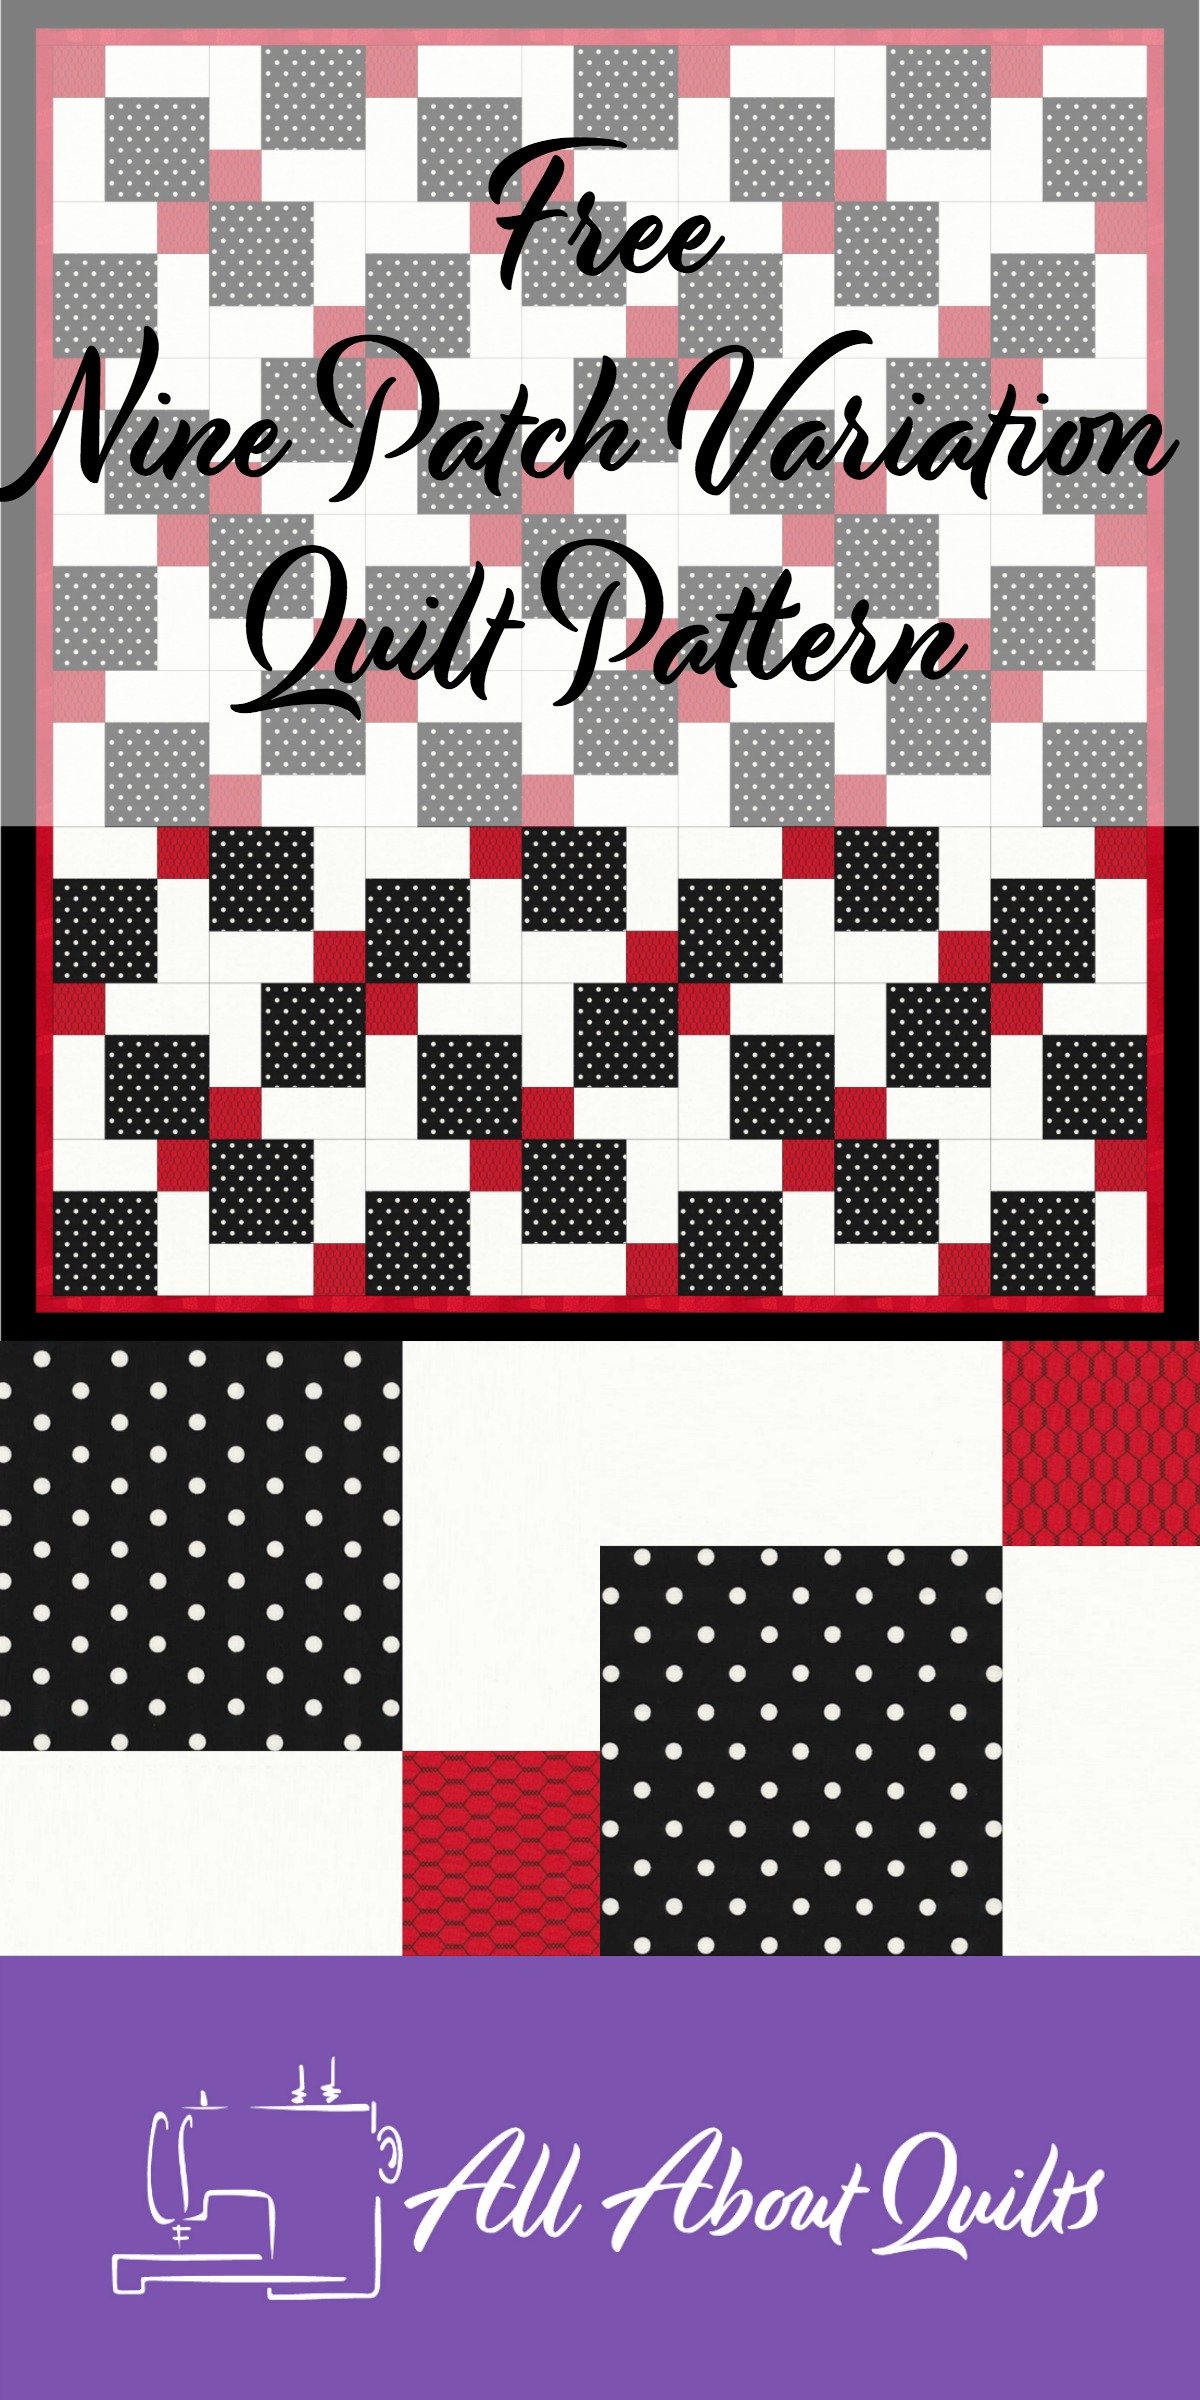 Free Nine Patch Variation quilt pattern